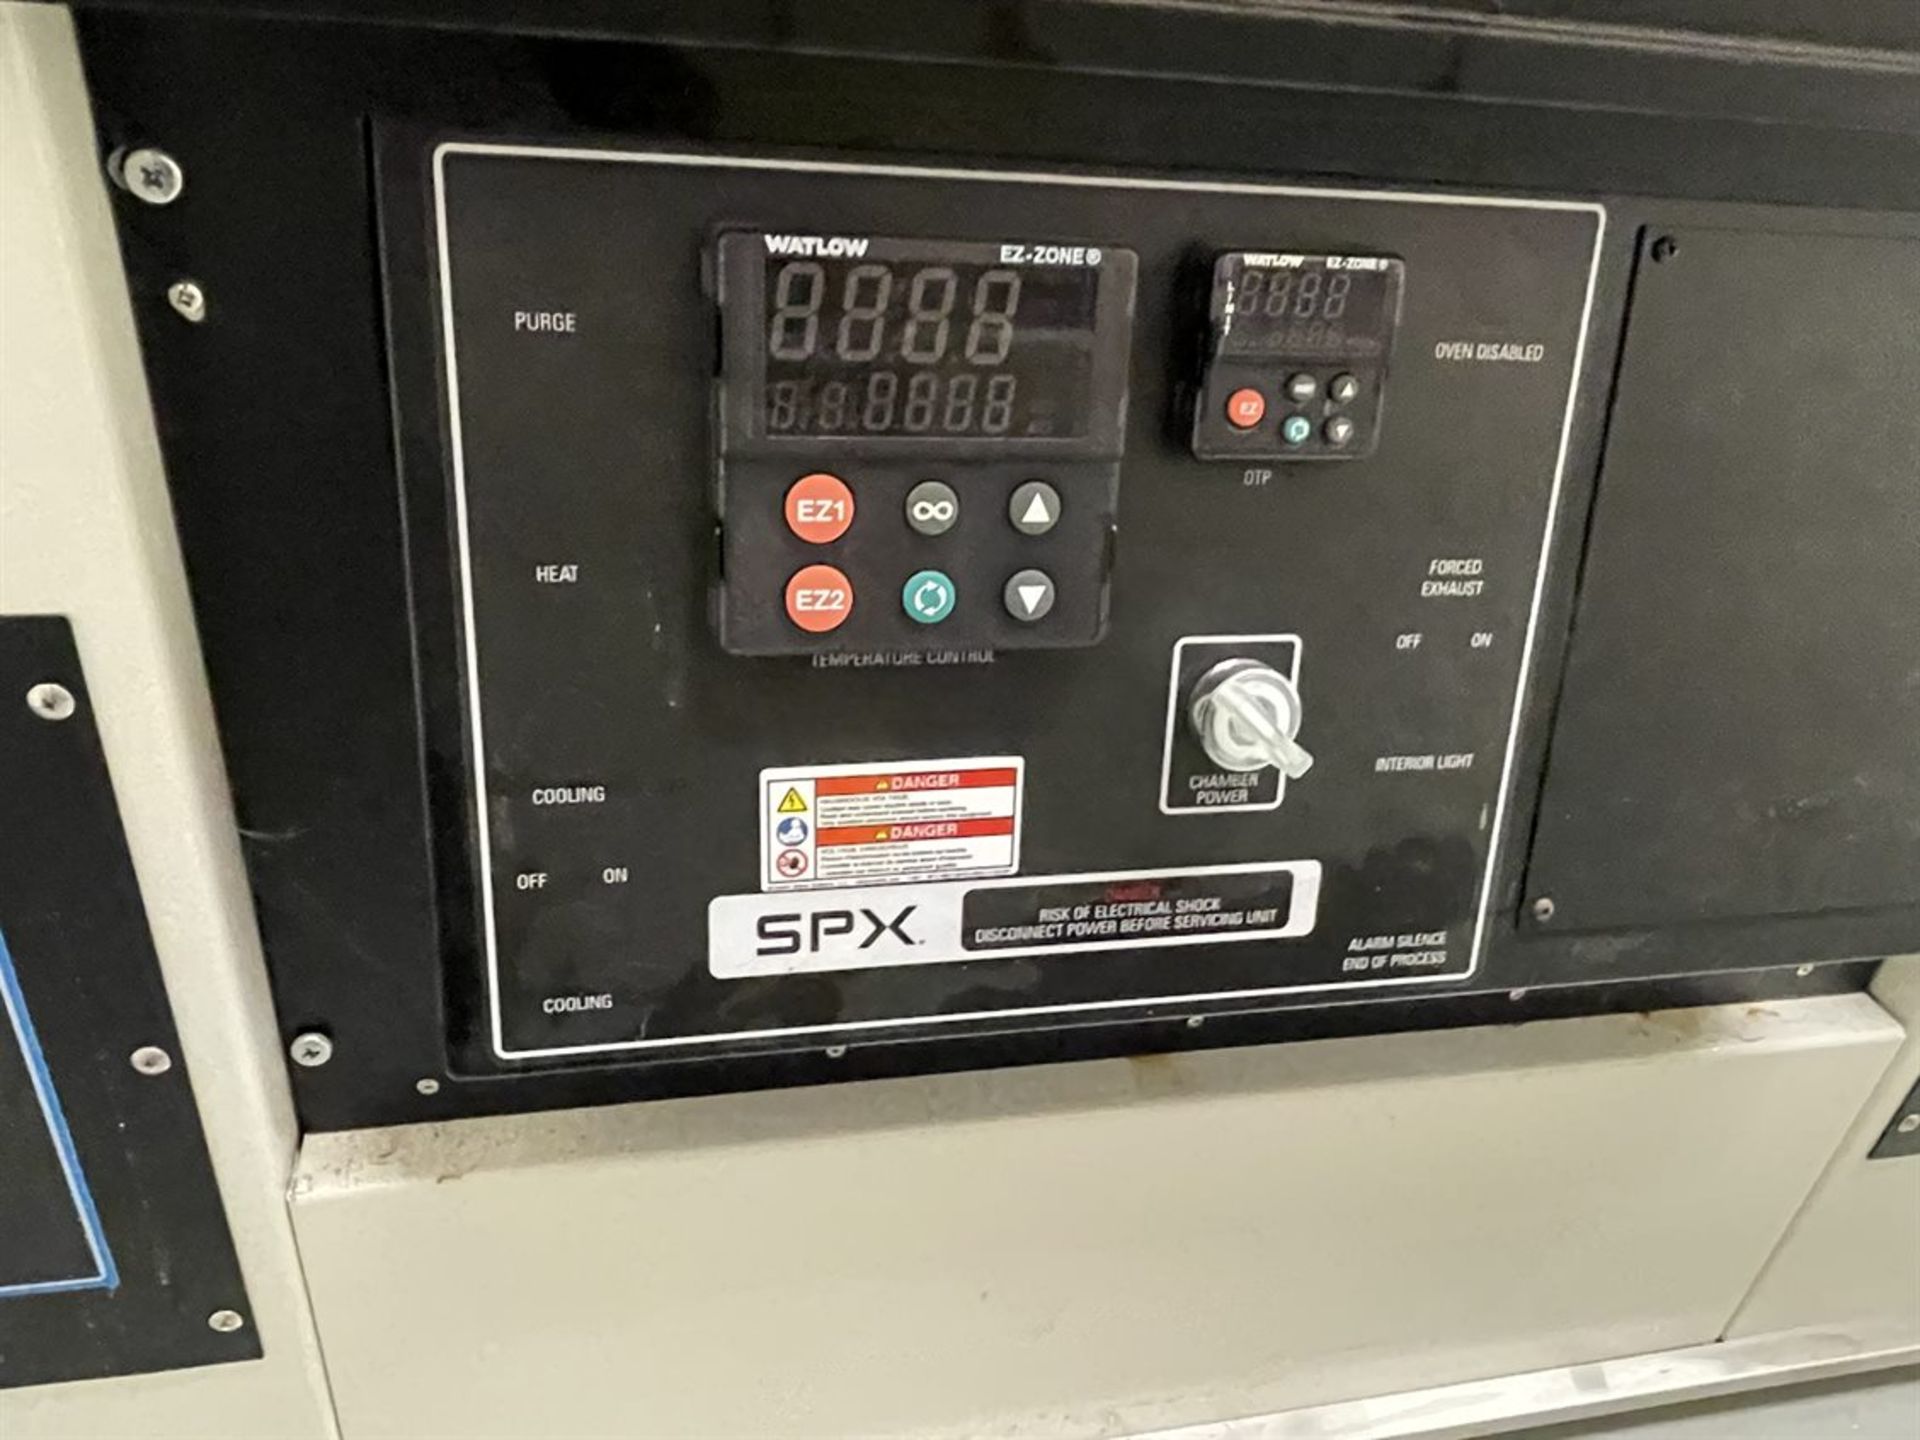 SPX Blue M DC-336-F-PM Electric Oven, s/n 95160, 24.5" x 18.5" x 37" High Capacity, 662 Deg F Max - Image 3 of 5